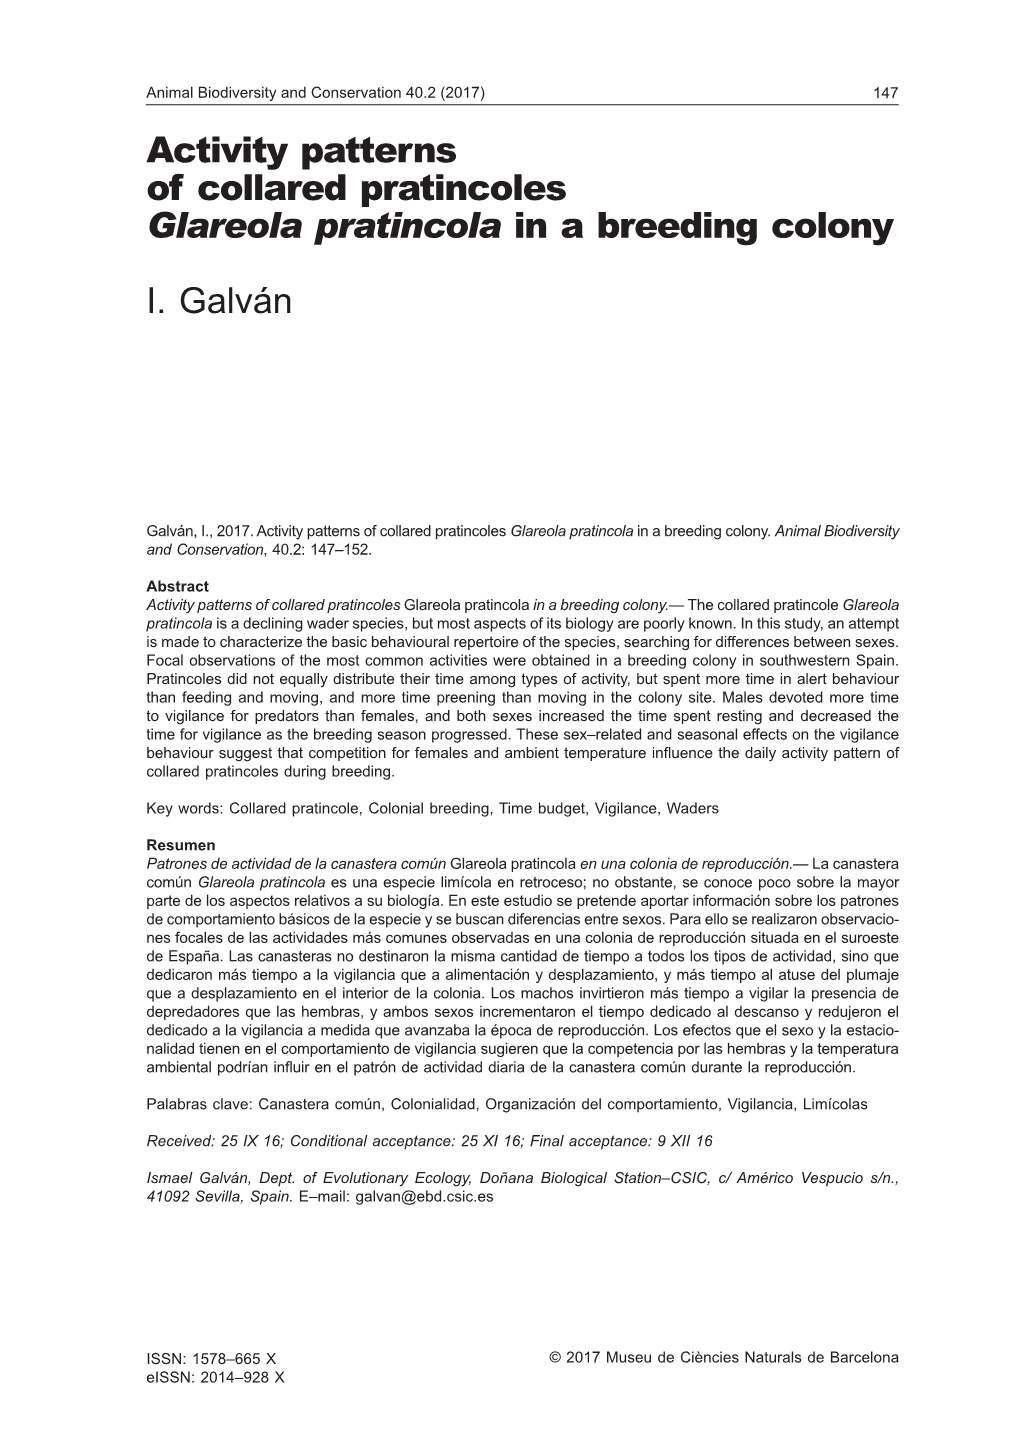 Glareola Pratincola in a Breeding Colony